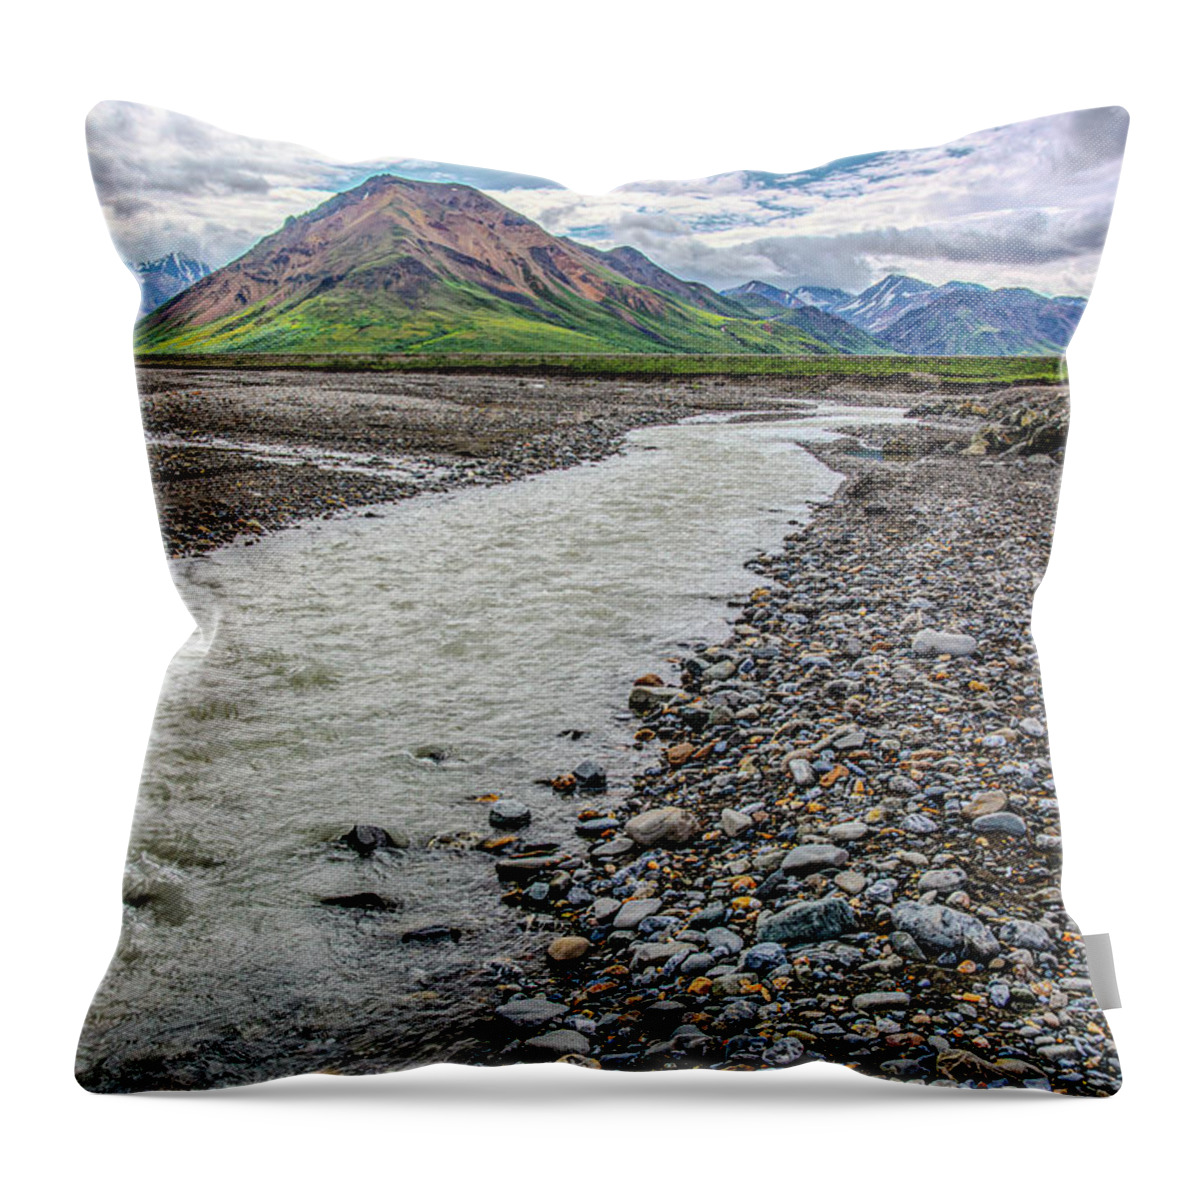 Denali Throw Pillow featuring the photograph At the Foot of Denali by Douglas Wielfaert